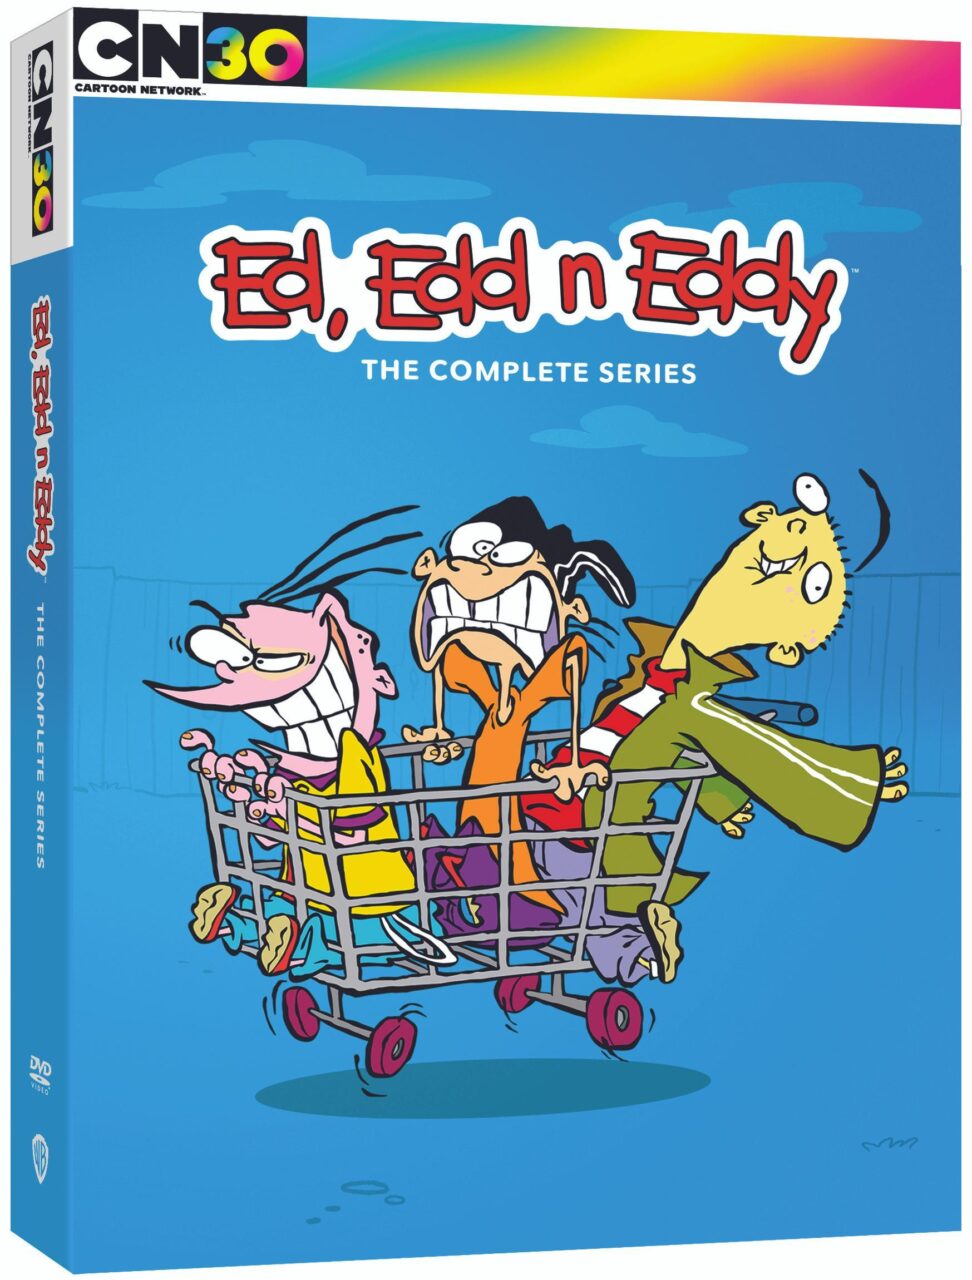 Ed, Edd n Eddy: The Complete Series (Cartoon Network/Warner Bros. Home Entertainment)